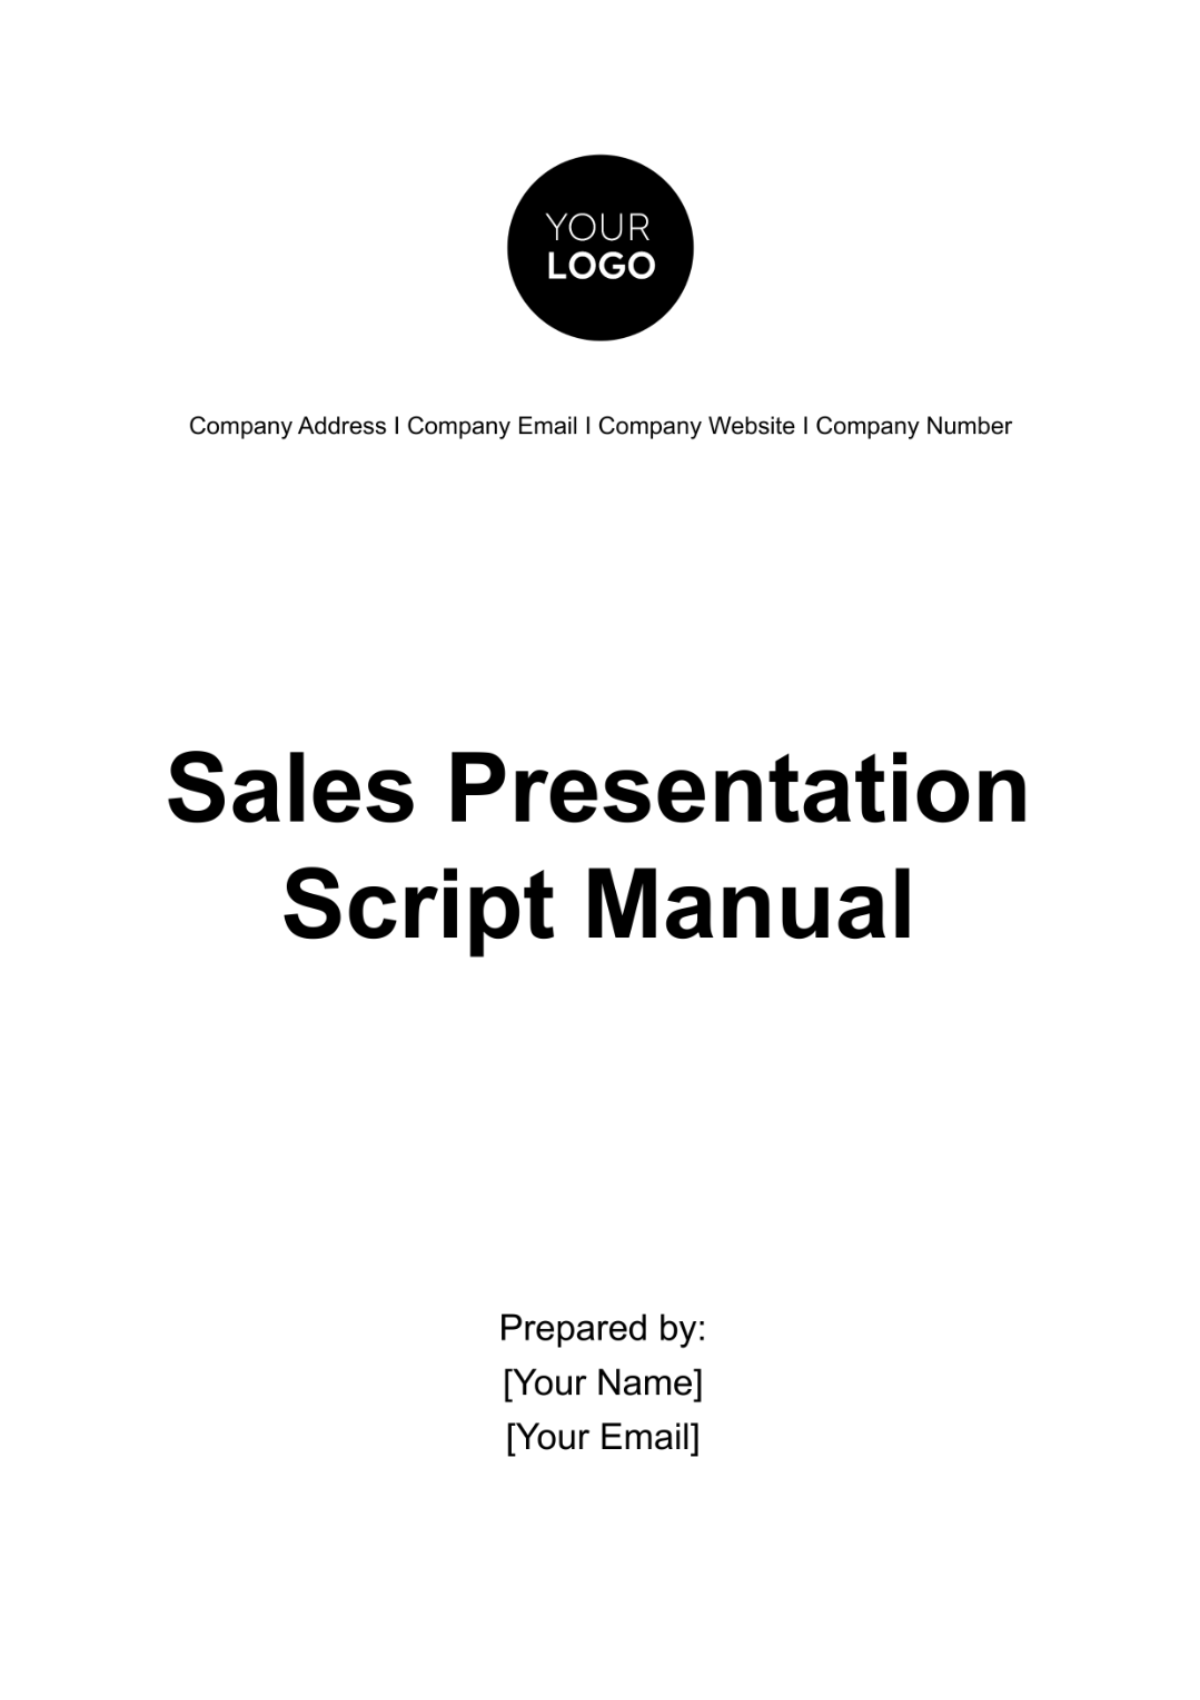 Sales Presentation Script Manual Template